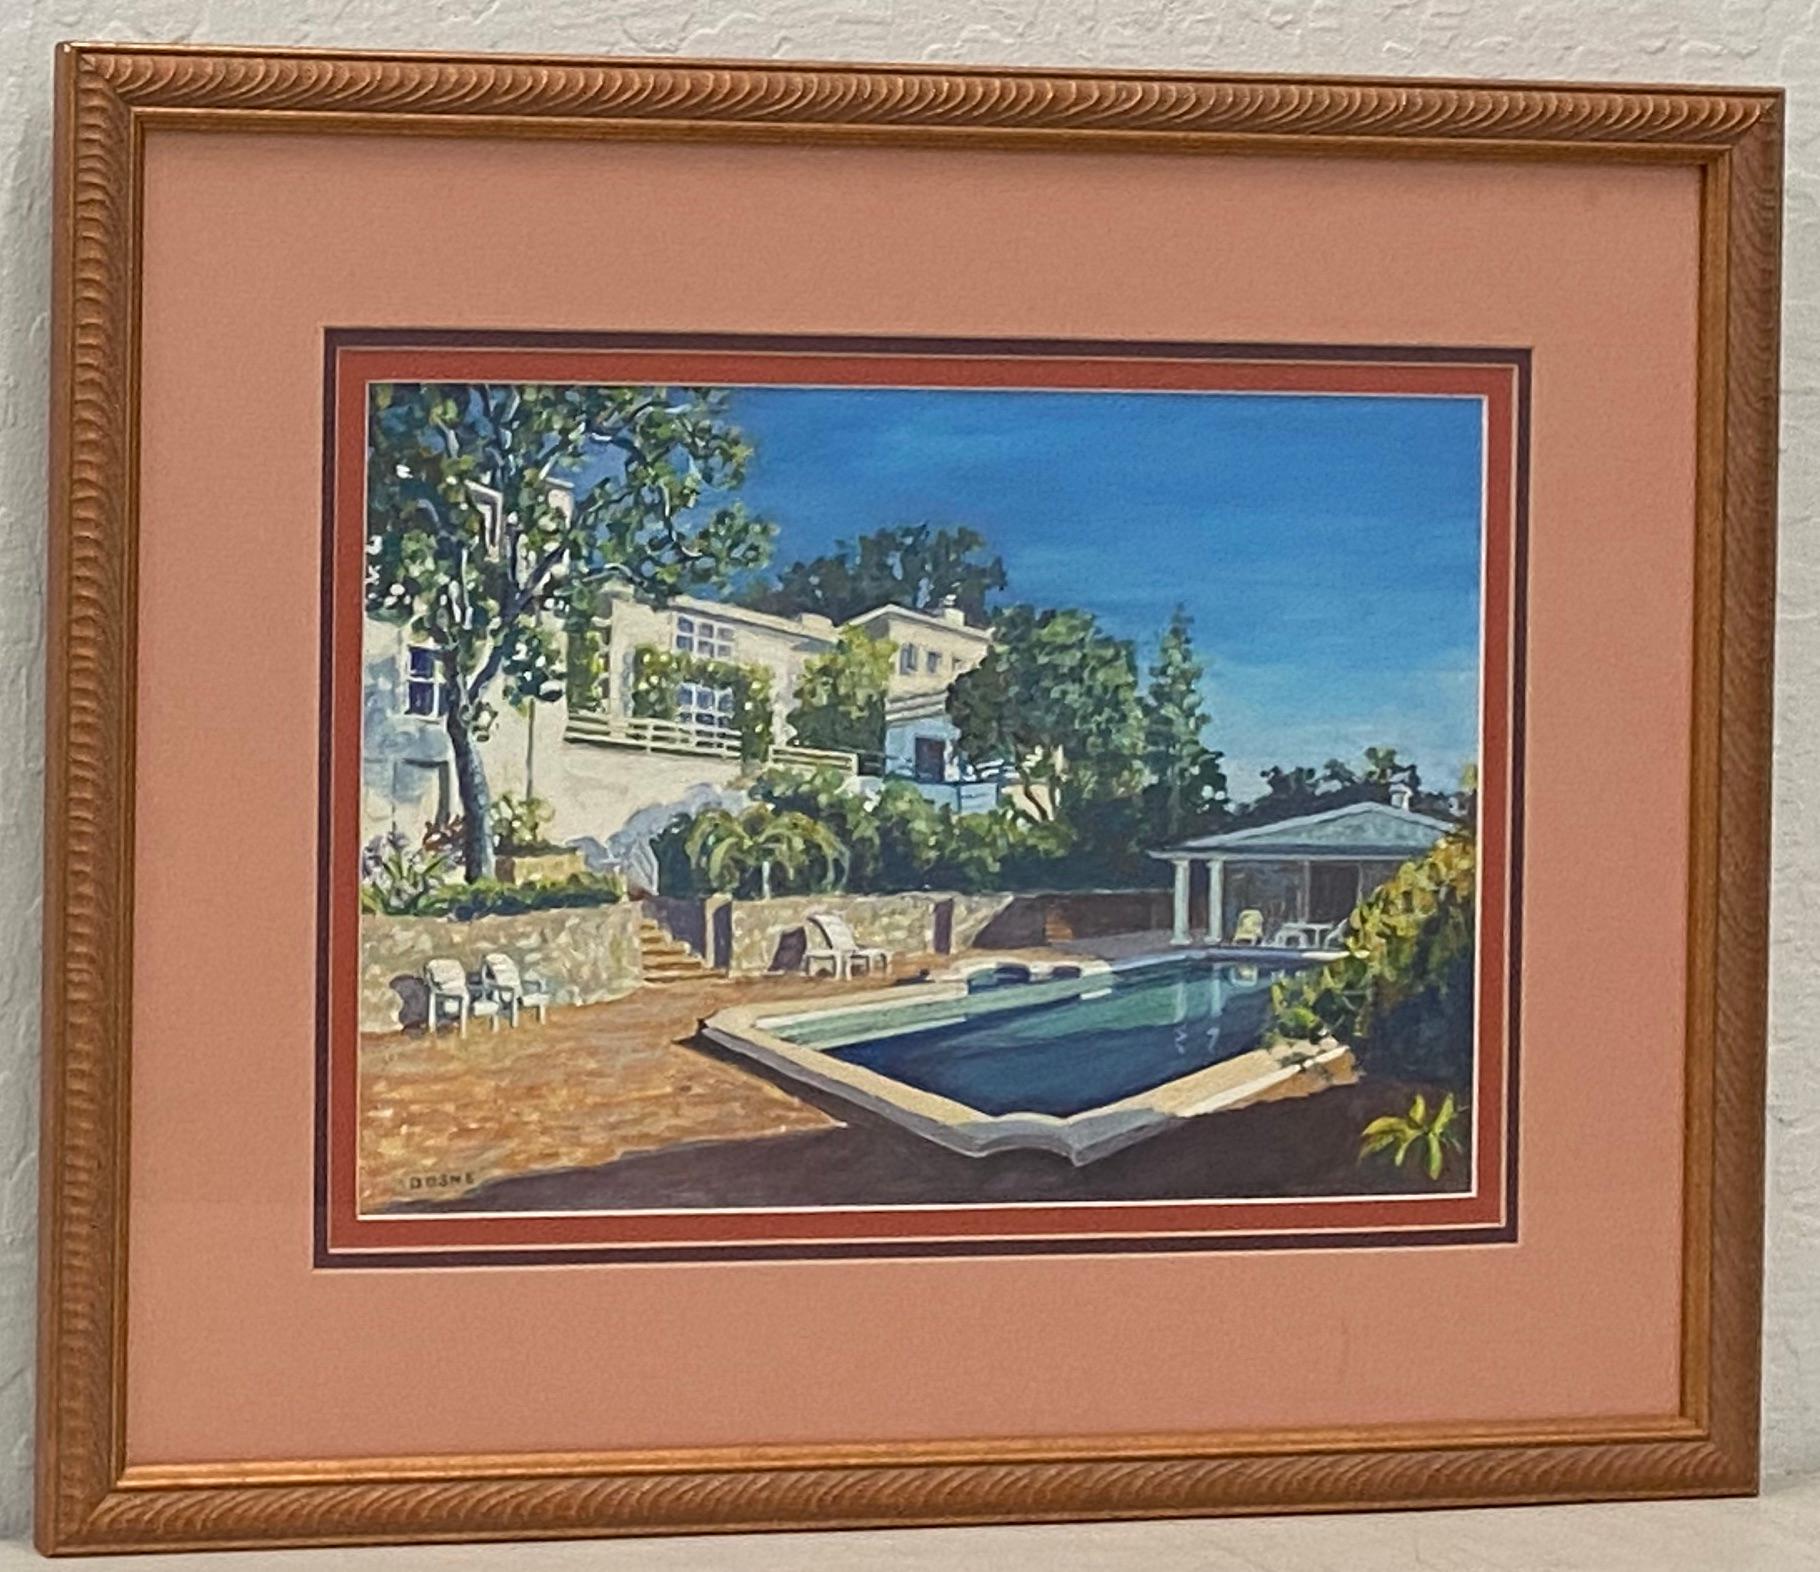 Unknown Landscape Painting - Vintage "Backyard Pool" Original Gouache Painting by Dosne